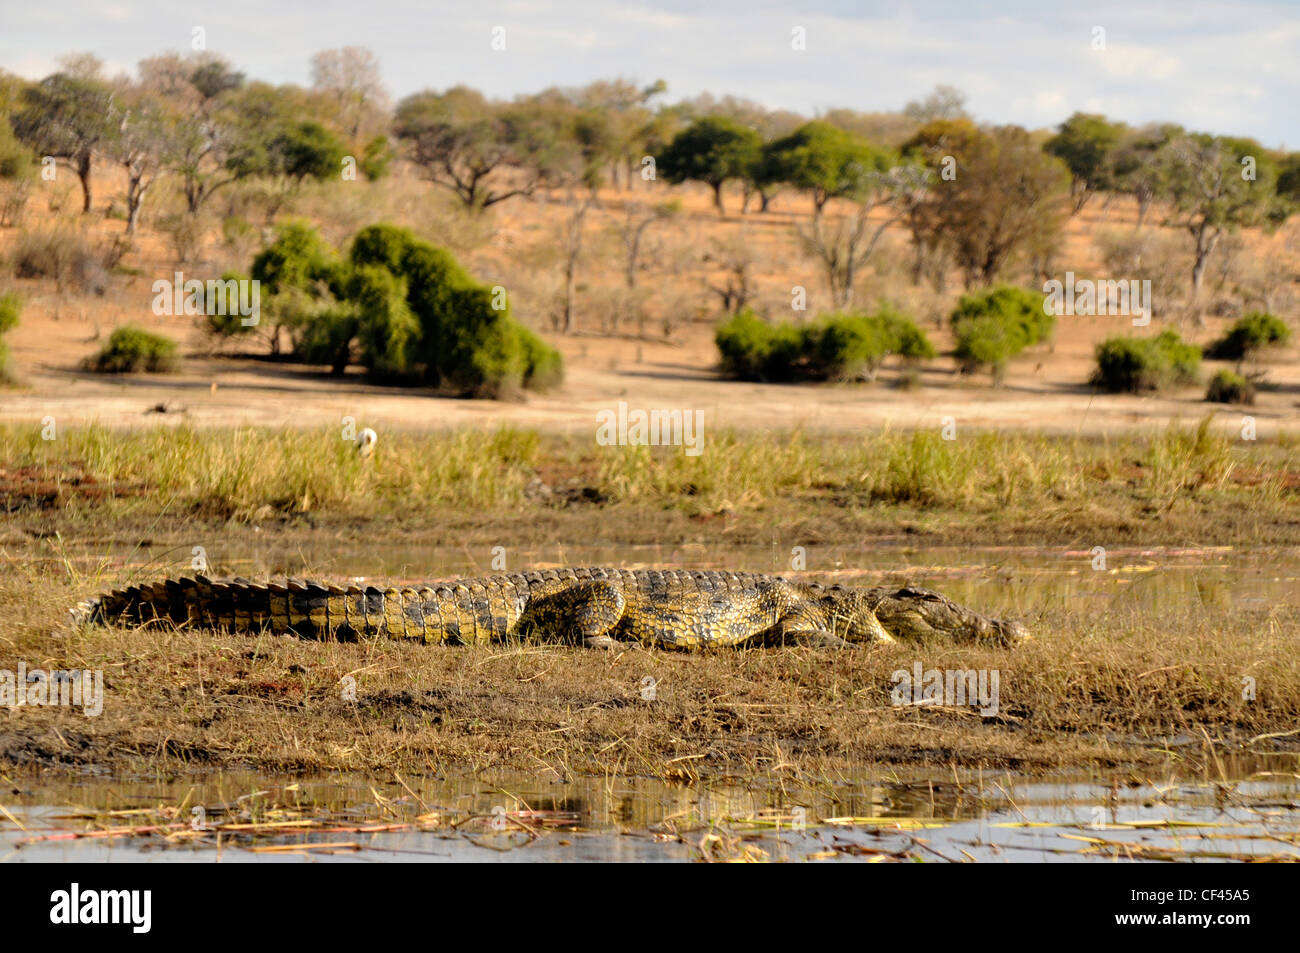 Crocodile on the banks of the Chobe River. Stock Photo